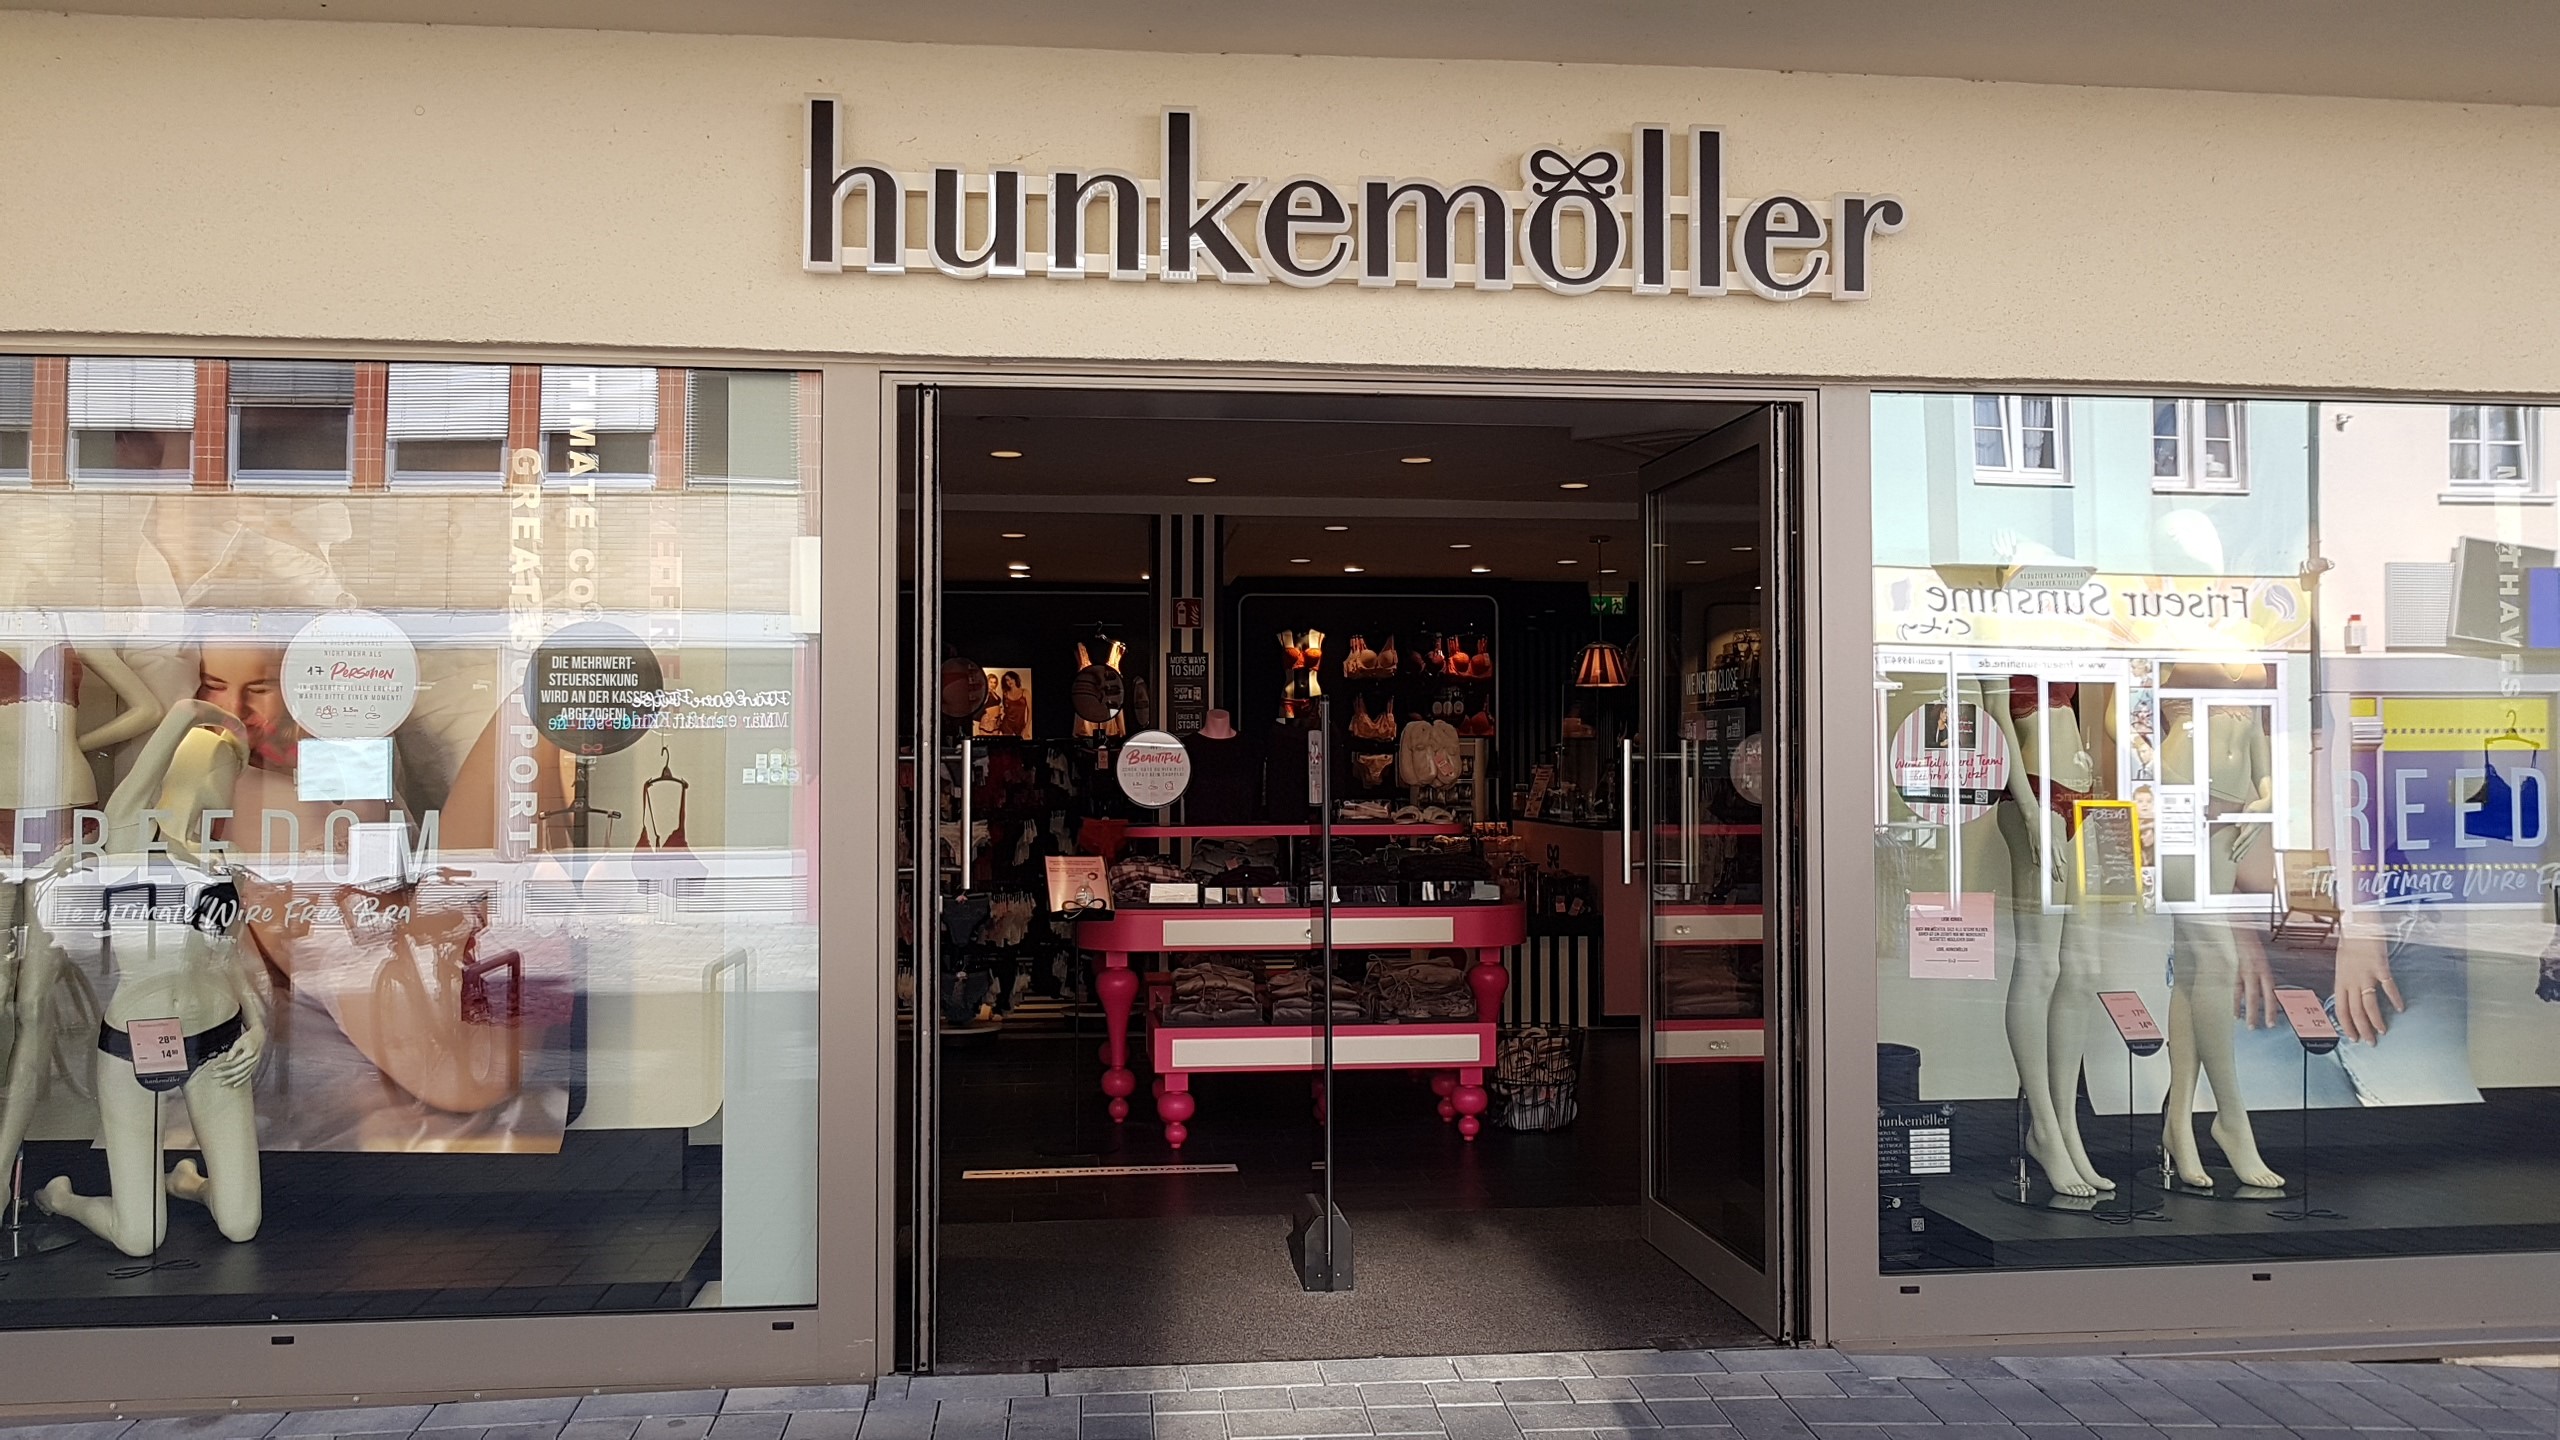 Hunkemöller, Kölnerstrasse 14 in Troisdorf